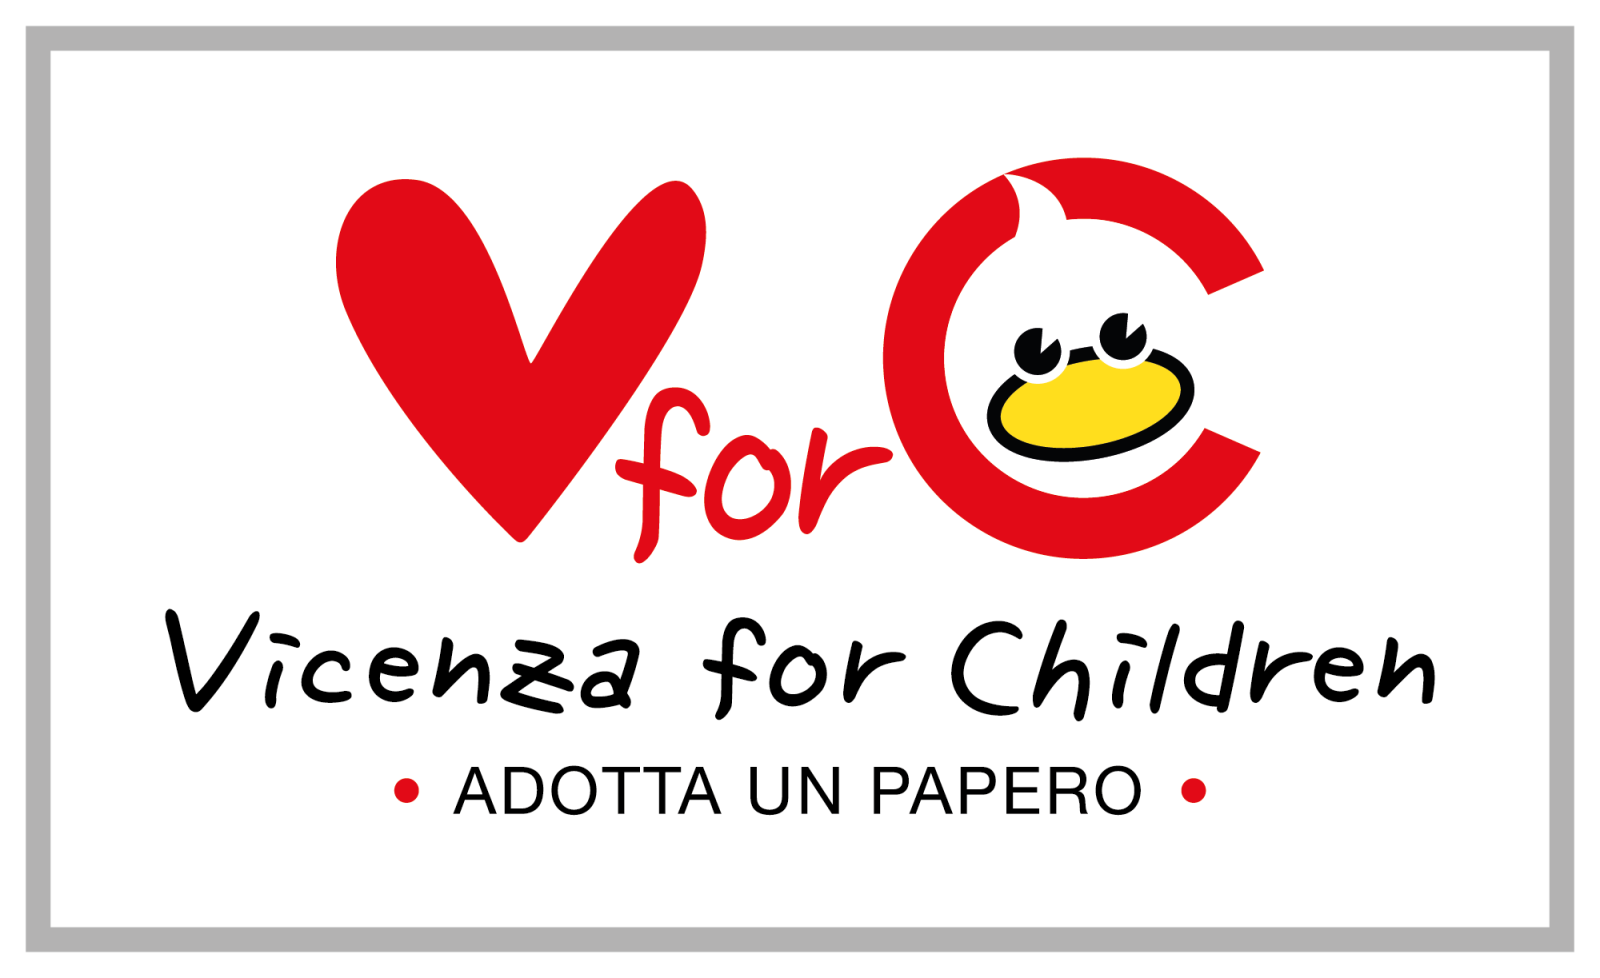 Vicenza for Children